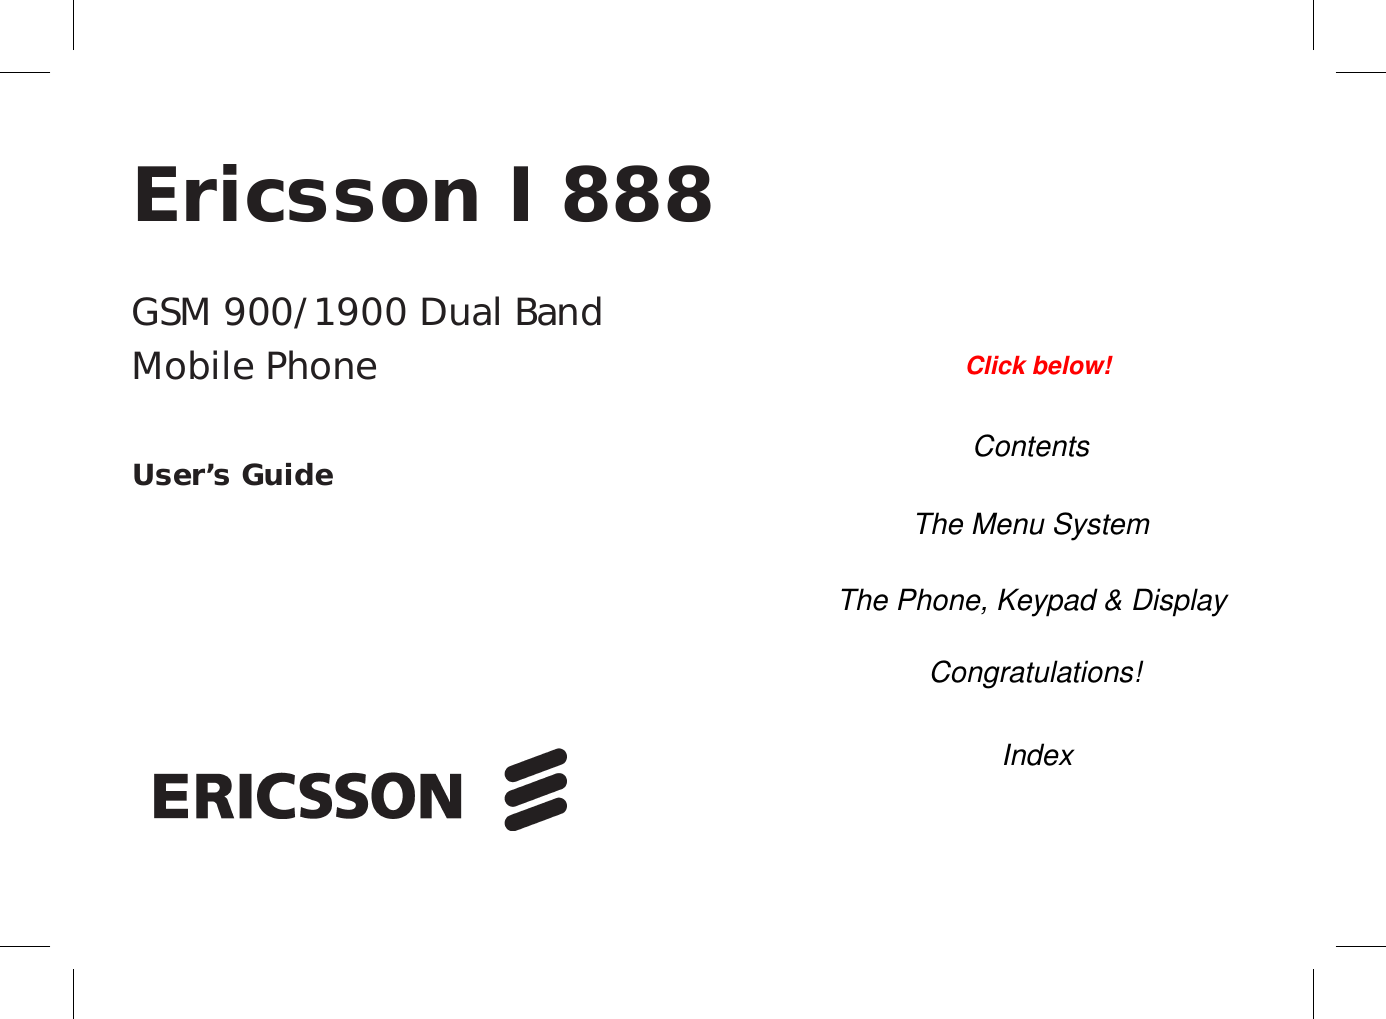 EricssonI888GSM900/1900DualBandMobilePhoneUser’sGuideContentsThe Menu SystemThe Phone, Keypad &amp; DisplayCongratulations!IndexClick below!